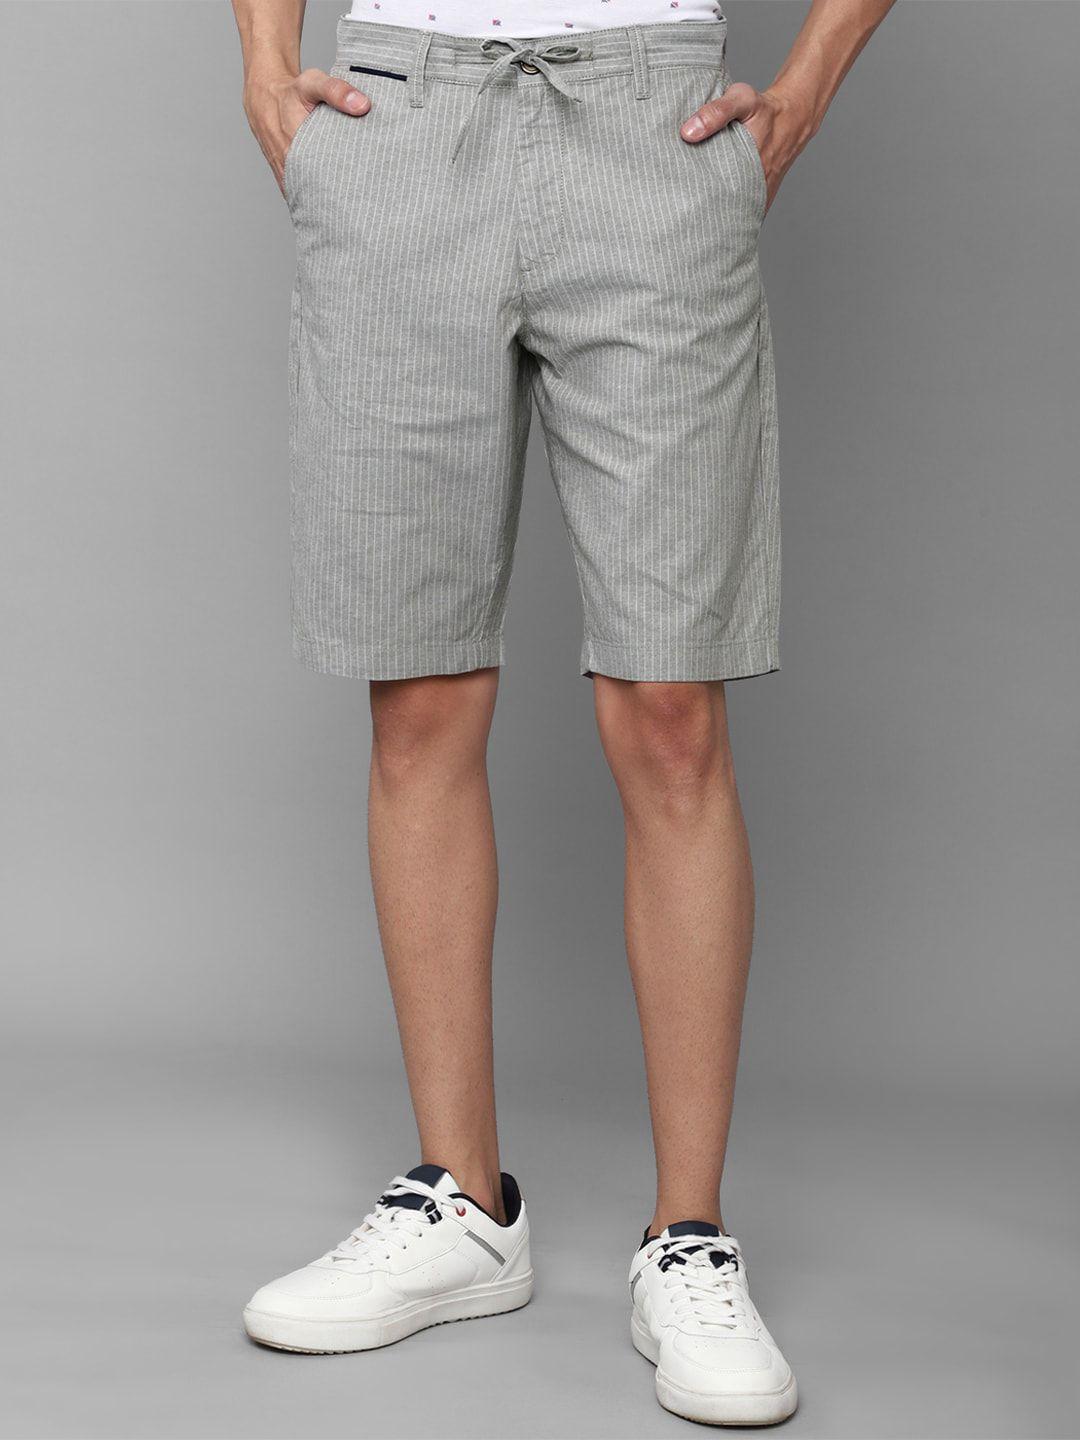 Allen Solly Men Grey Striped Slim Fit Shorts